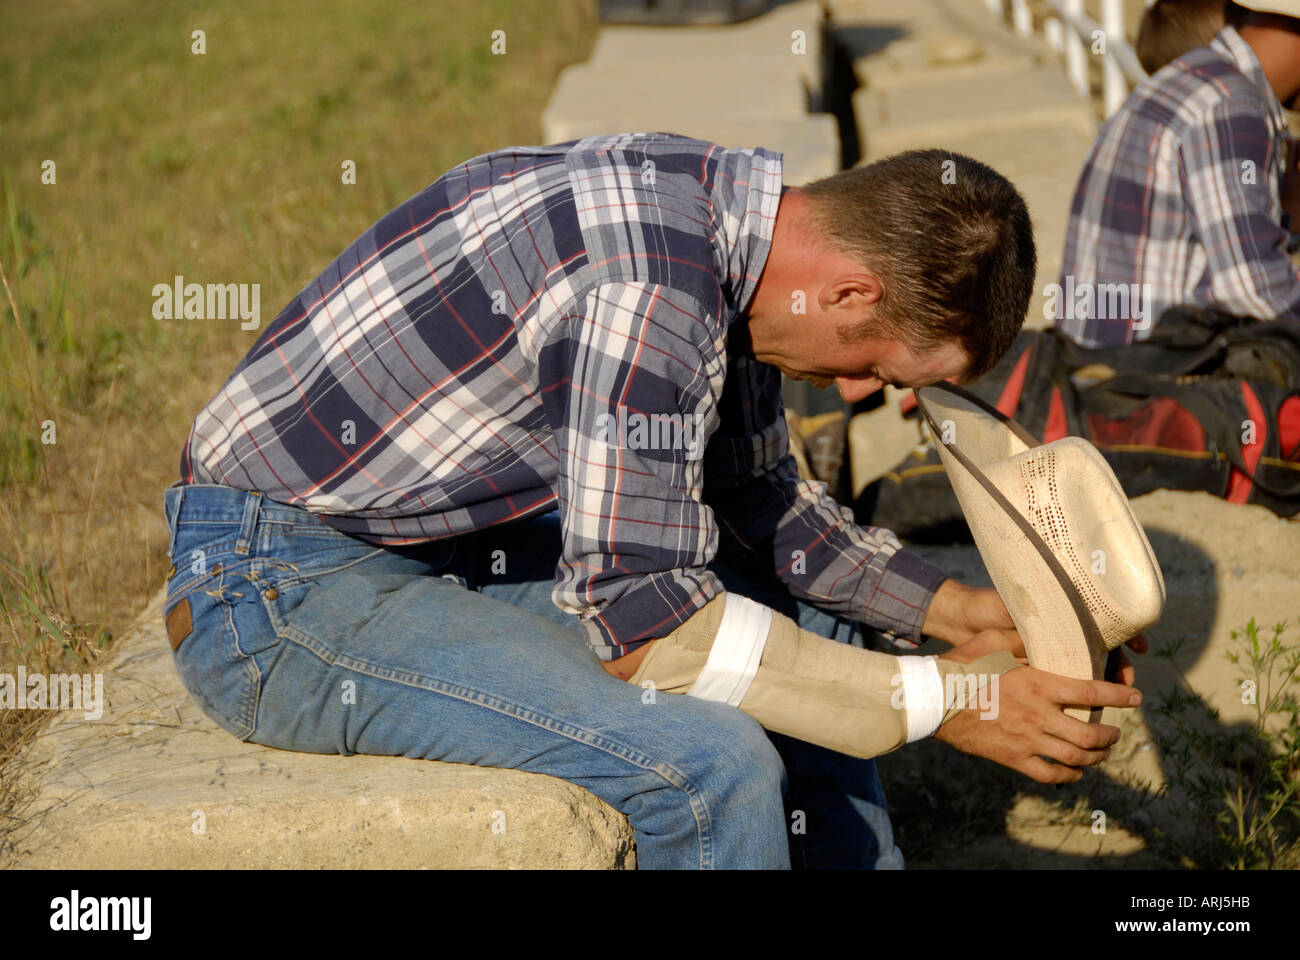 Cowboys emotionally prepare for a Rodeo event Stock Photo